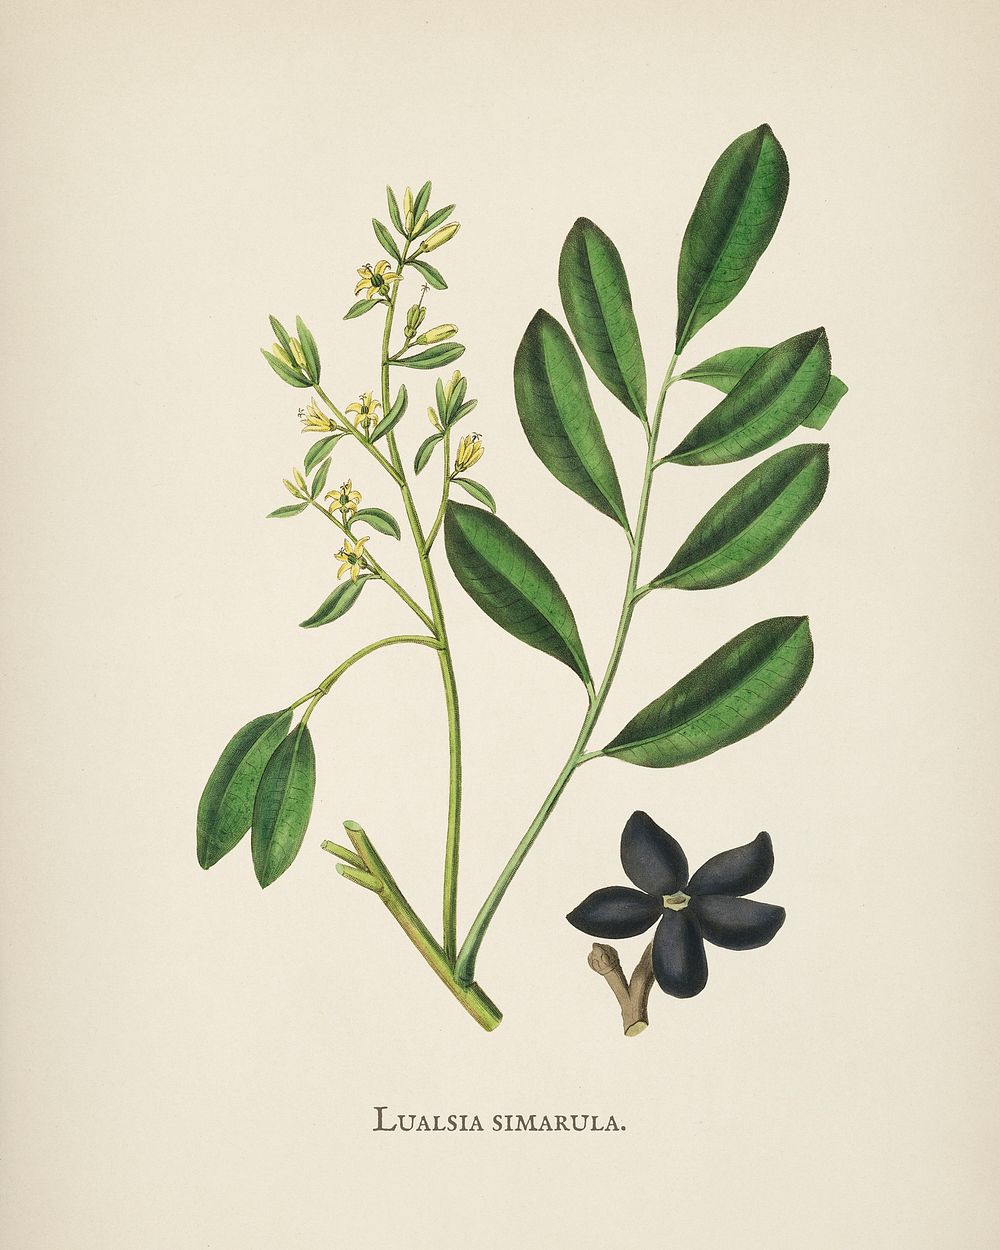 Lualsia simarula illustration from Medical Botany (1836) by John Stephenson and James Morss Churchill.